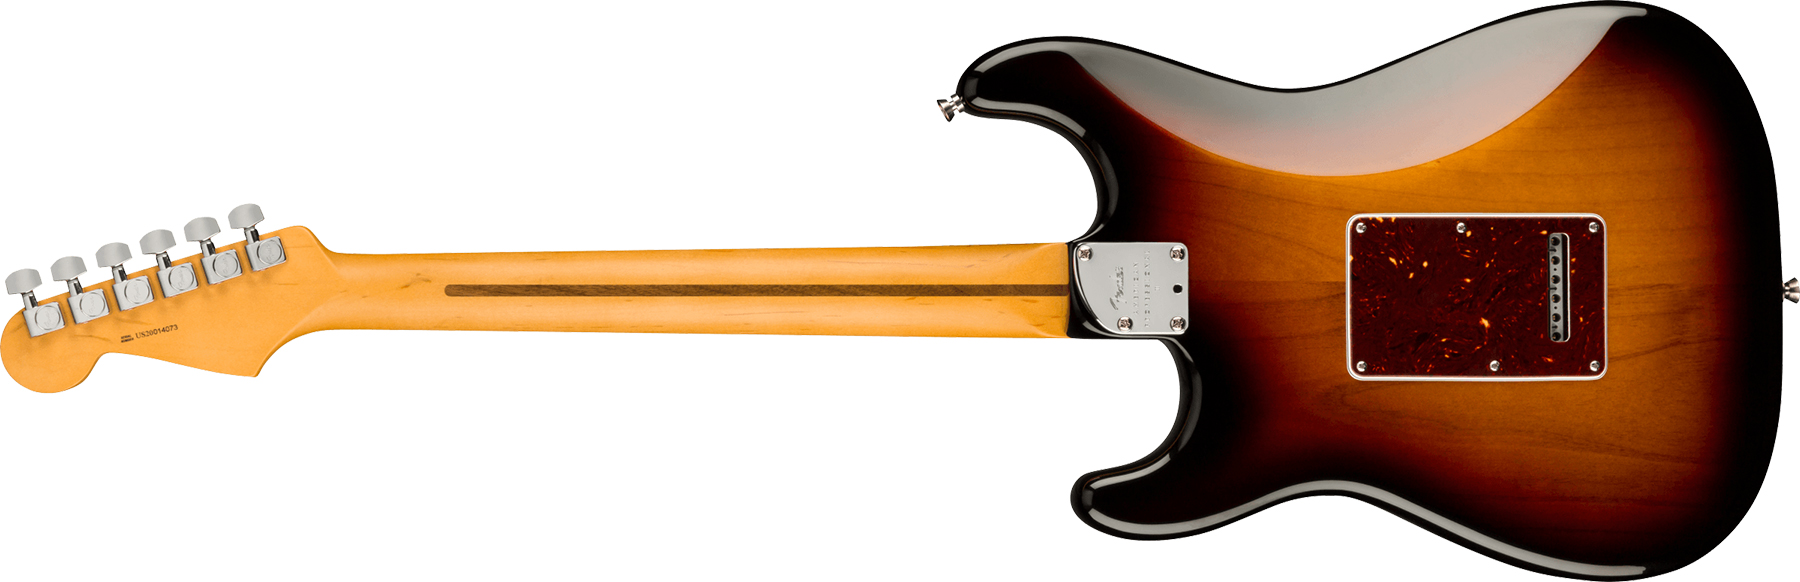 Fender Strat American Professional Ii Usa Rw - 3-color Sunburst - Str shape electric guitar - Variation 1